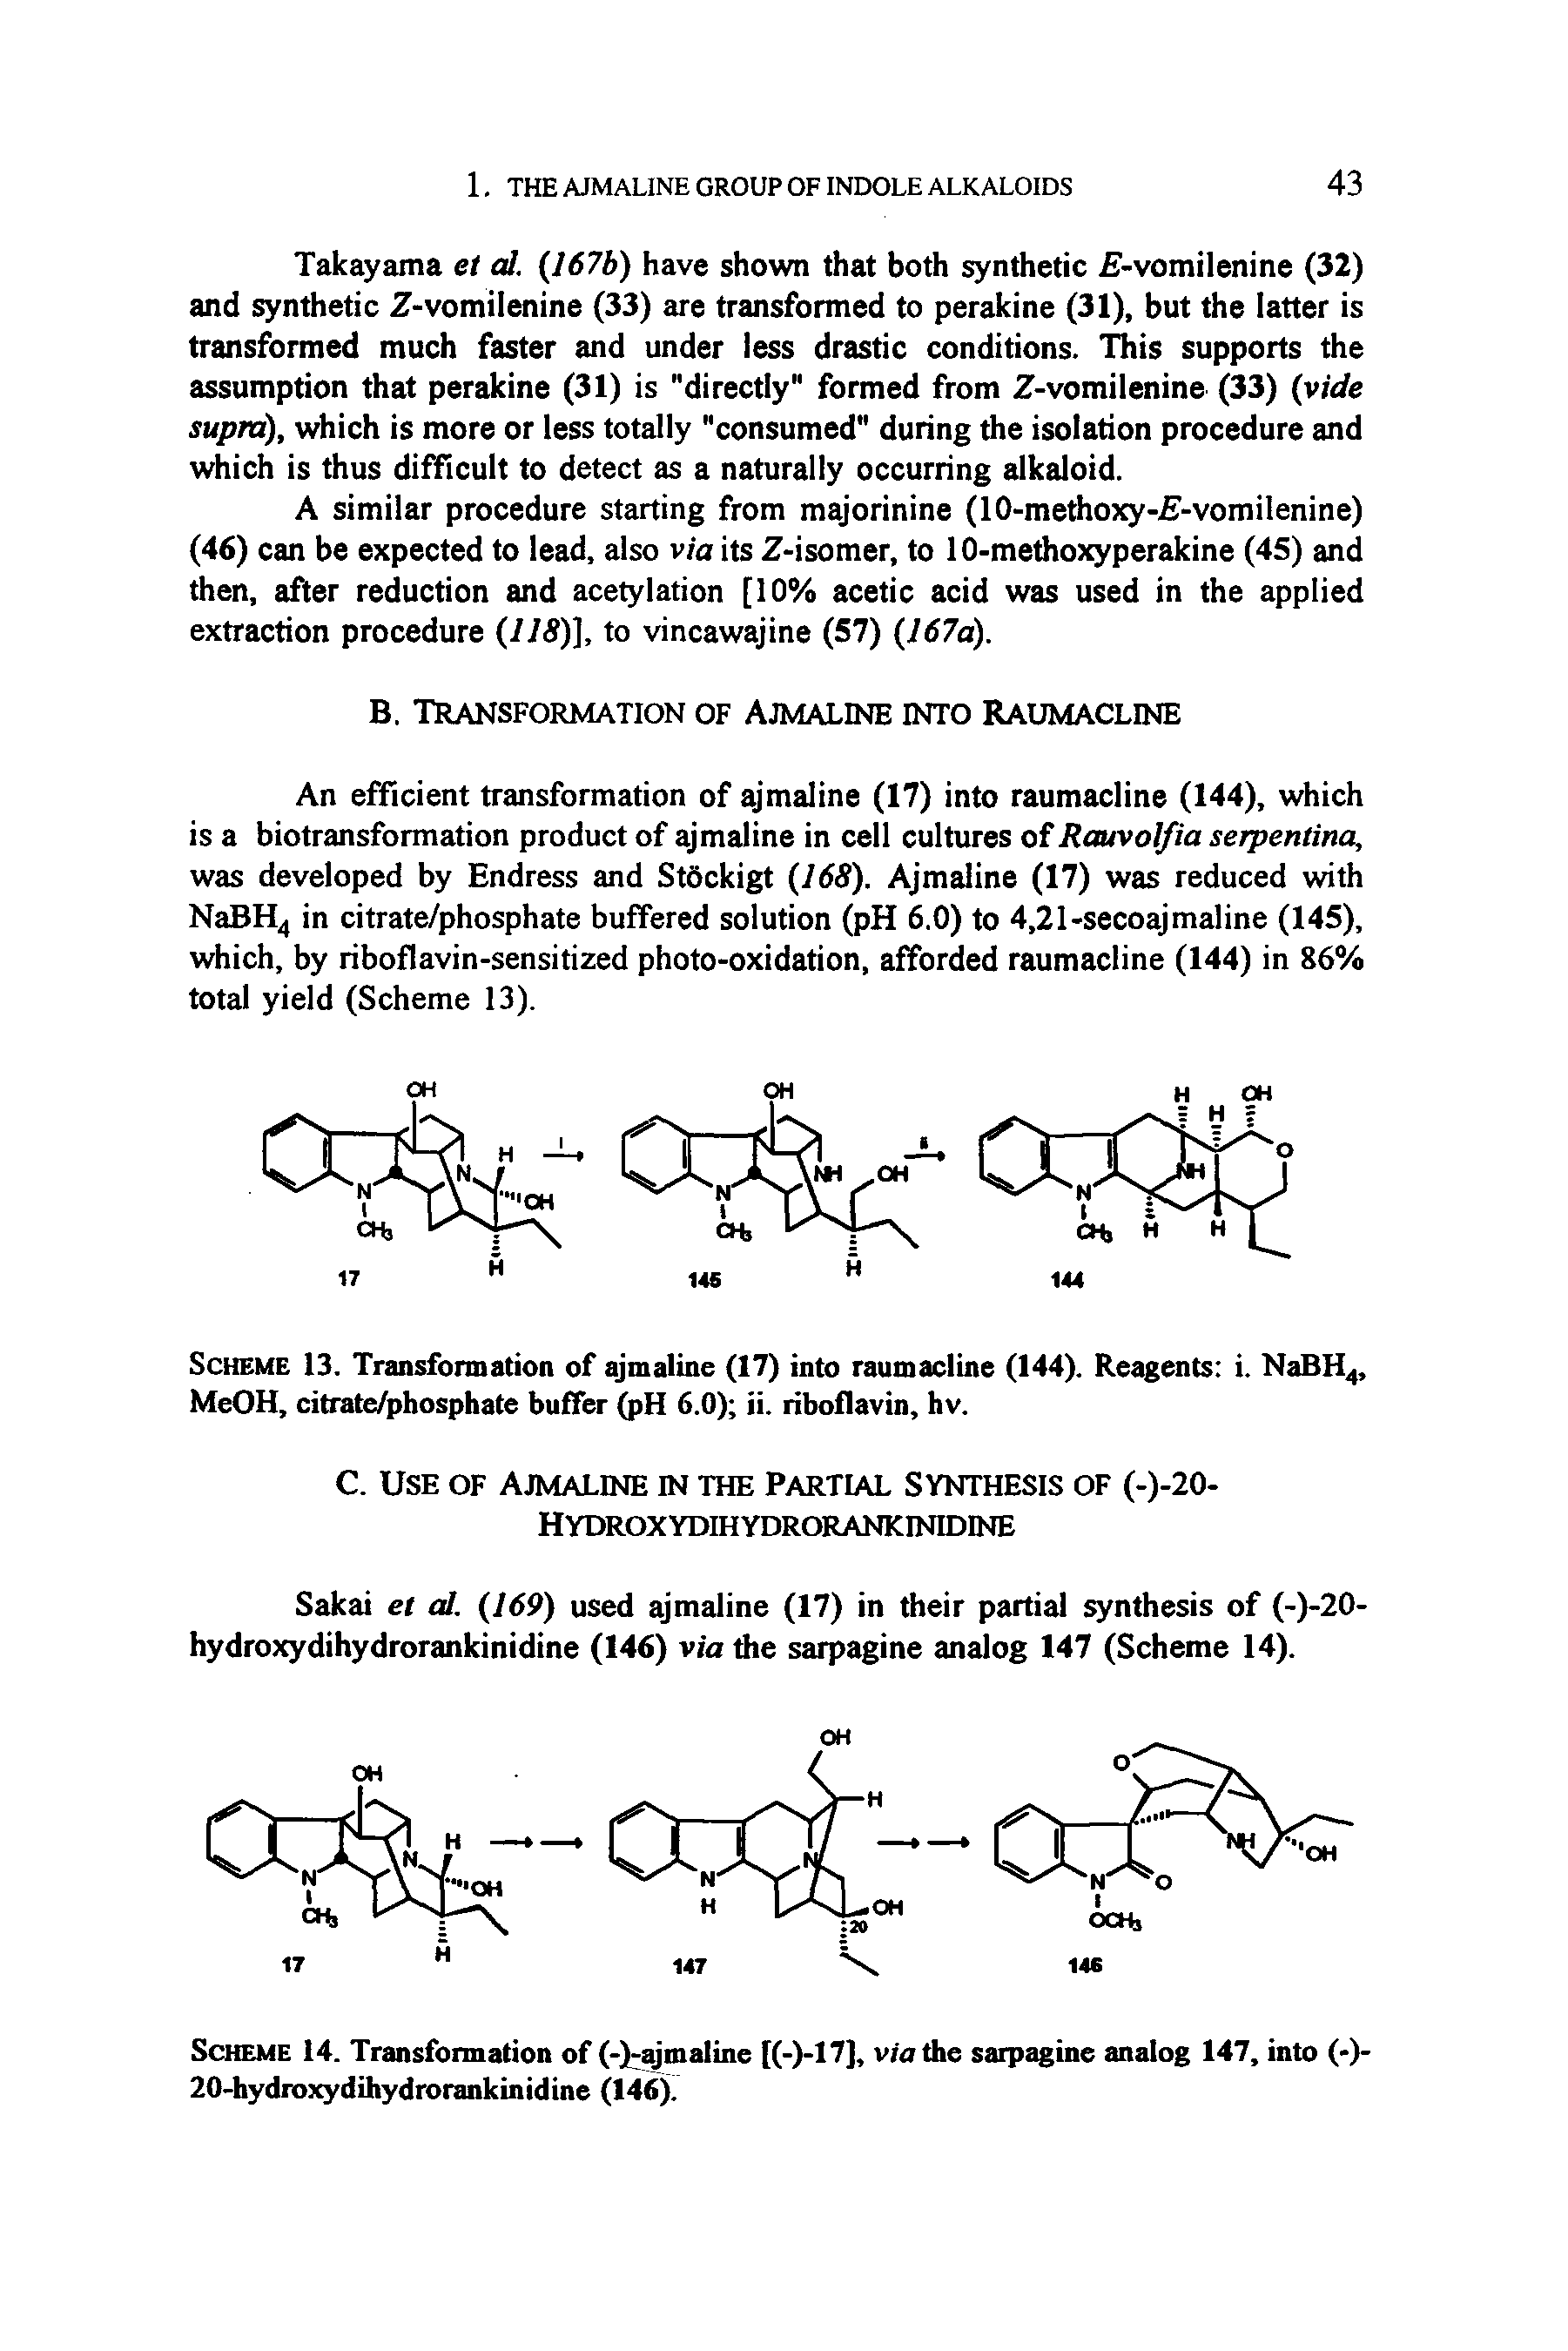 Scheme 13. Transformation of ajmaline (17) into raumacline (144). Reagents i. NaBH, MeOH, citrate bosphate buffer 6.0) ii. riboflavin, hv.